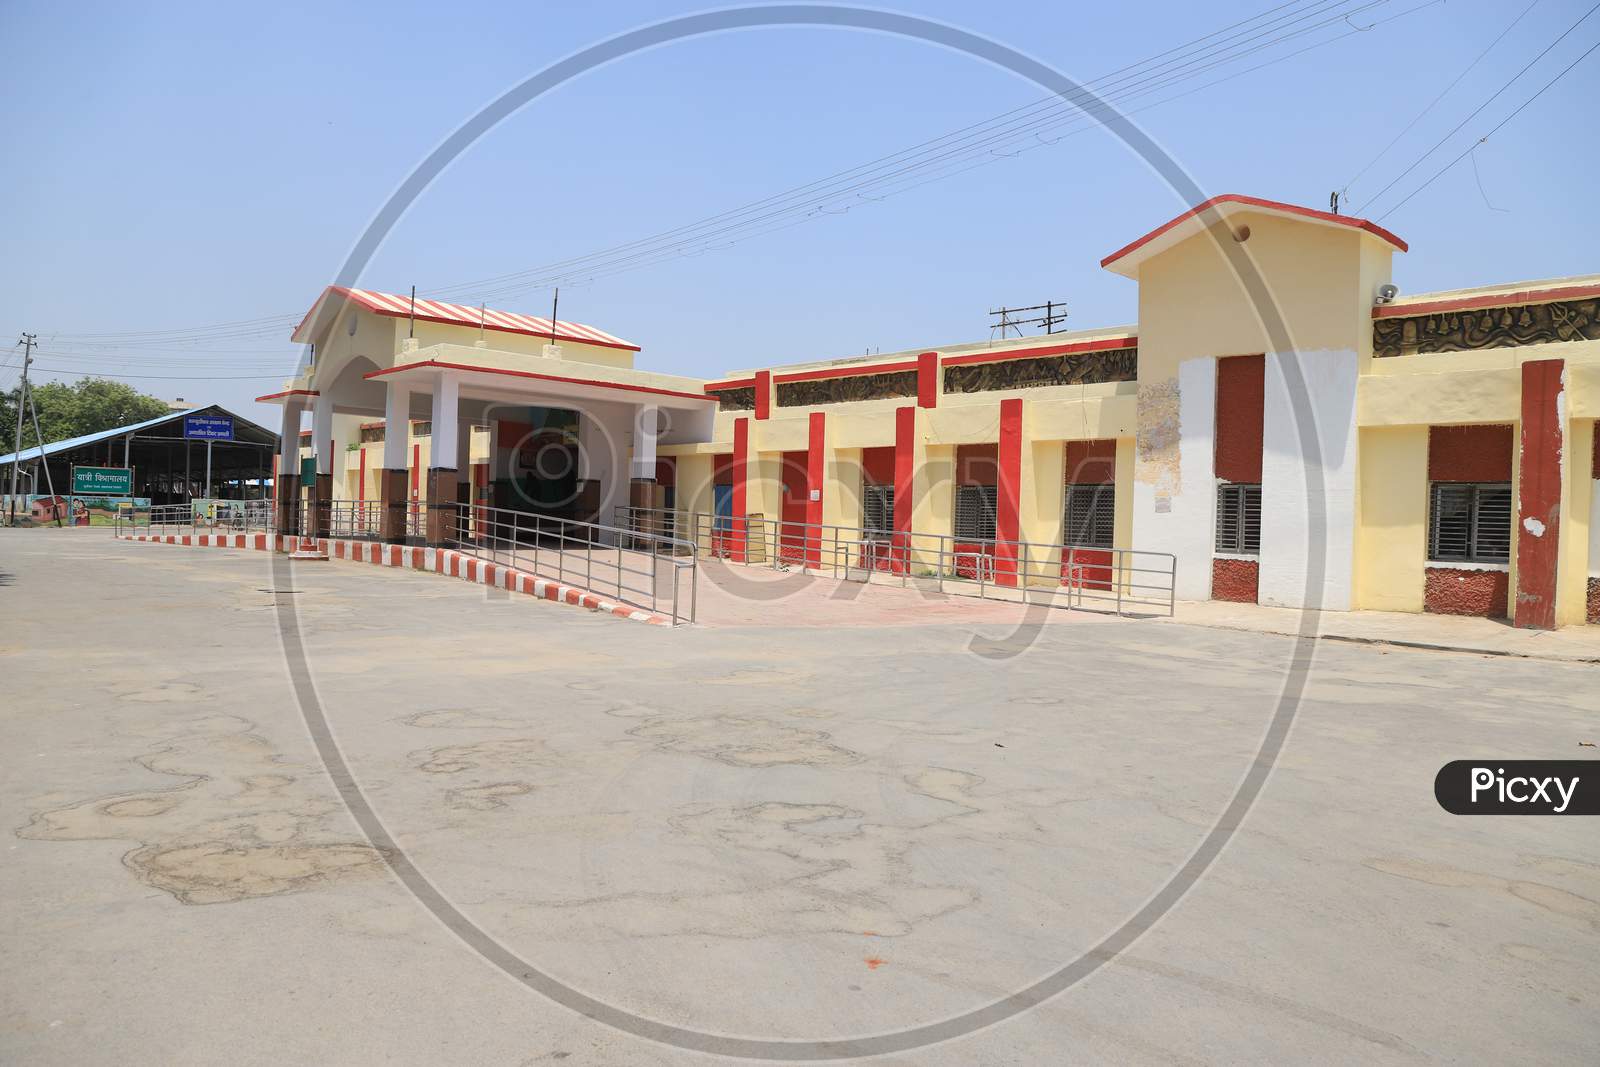 A View Of Deserted Railway Station premises During Nationwide Lockdown Amidst Coronavirus Or COVID-19 Outbreak in Prayagraj